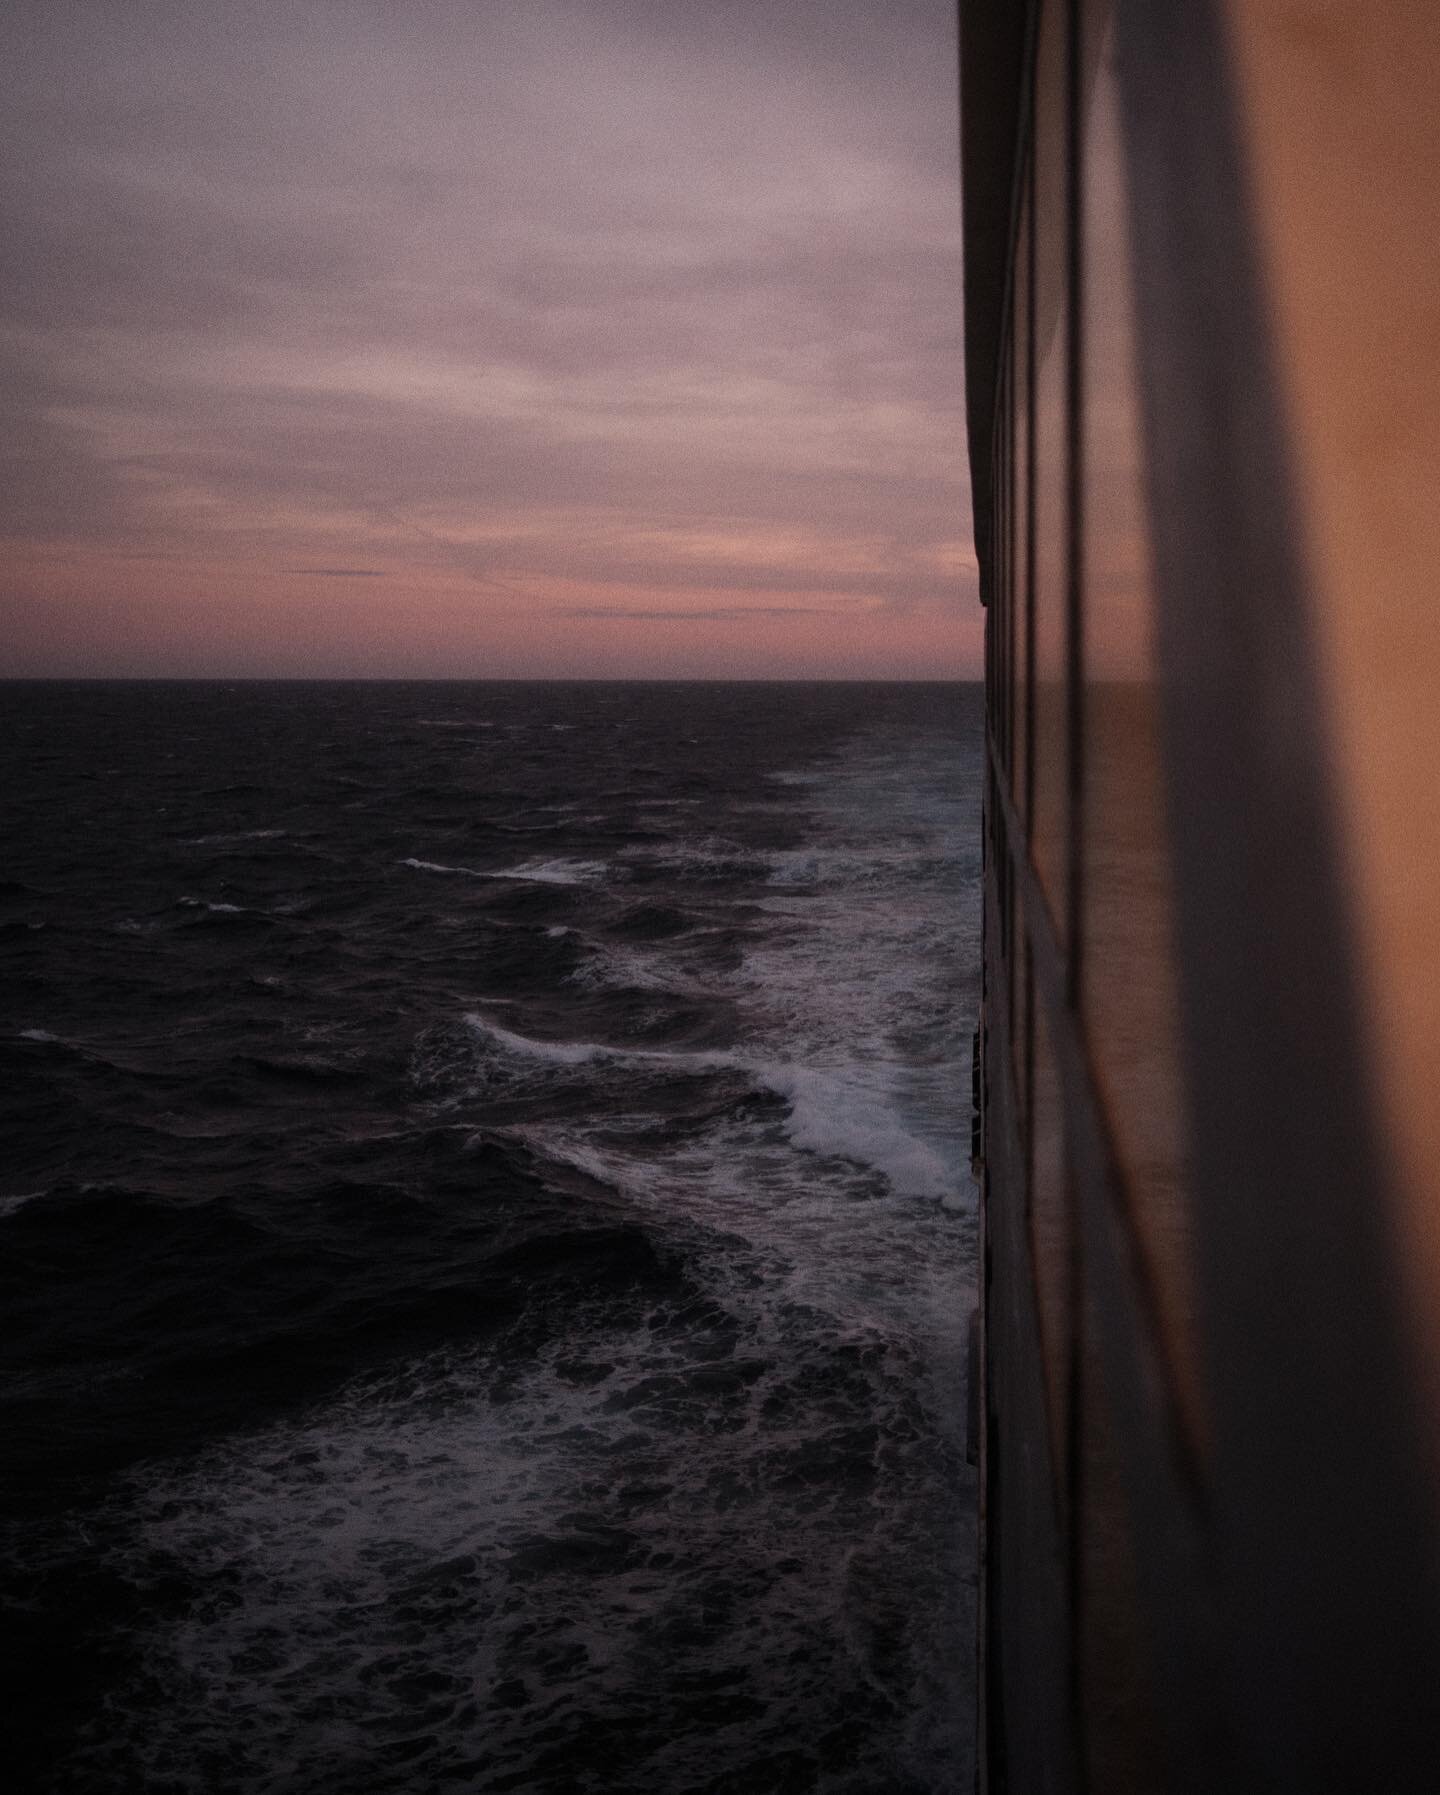 seven.am.on.the.mediterranean ⠀⠀⠀⠀⠀⠀⠀⠀⠀⠀⠀⠀⠀⠀⠀⠀⠀⠀⠀⠀⠀⠀⠀⠀⠀⠀⠀⠀⠀⠀⠀⠀⠀⠀⠀⠀⠀⠀⠀⠀⠀⠀⠀⠀⠀⠀⠀⠀⠀⠀
#ocean
#sunrise 
#mediterraneansea 
#corsicaferries 
#sea
#france
#photography 
#travelphotography